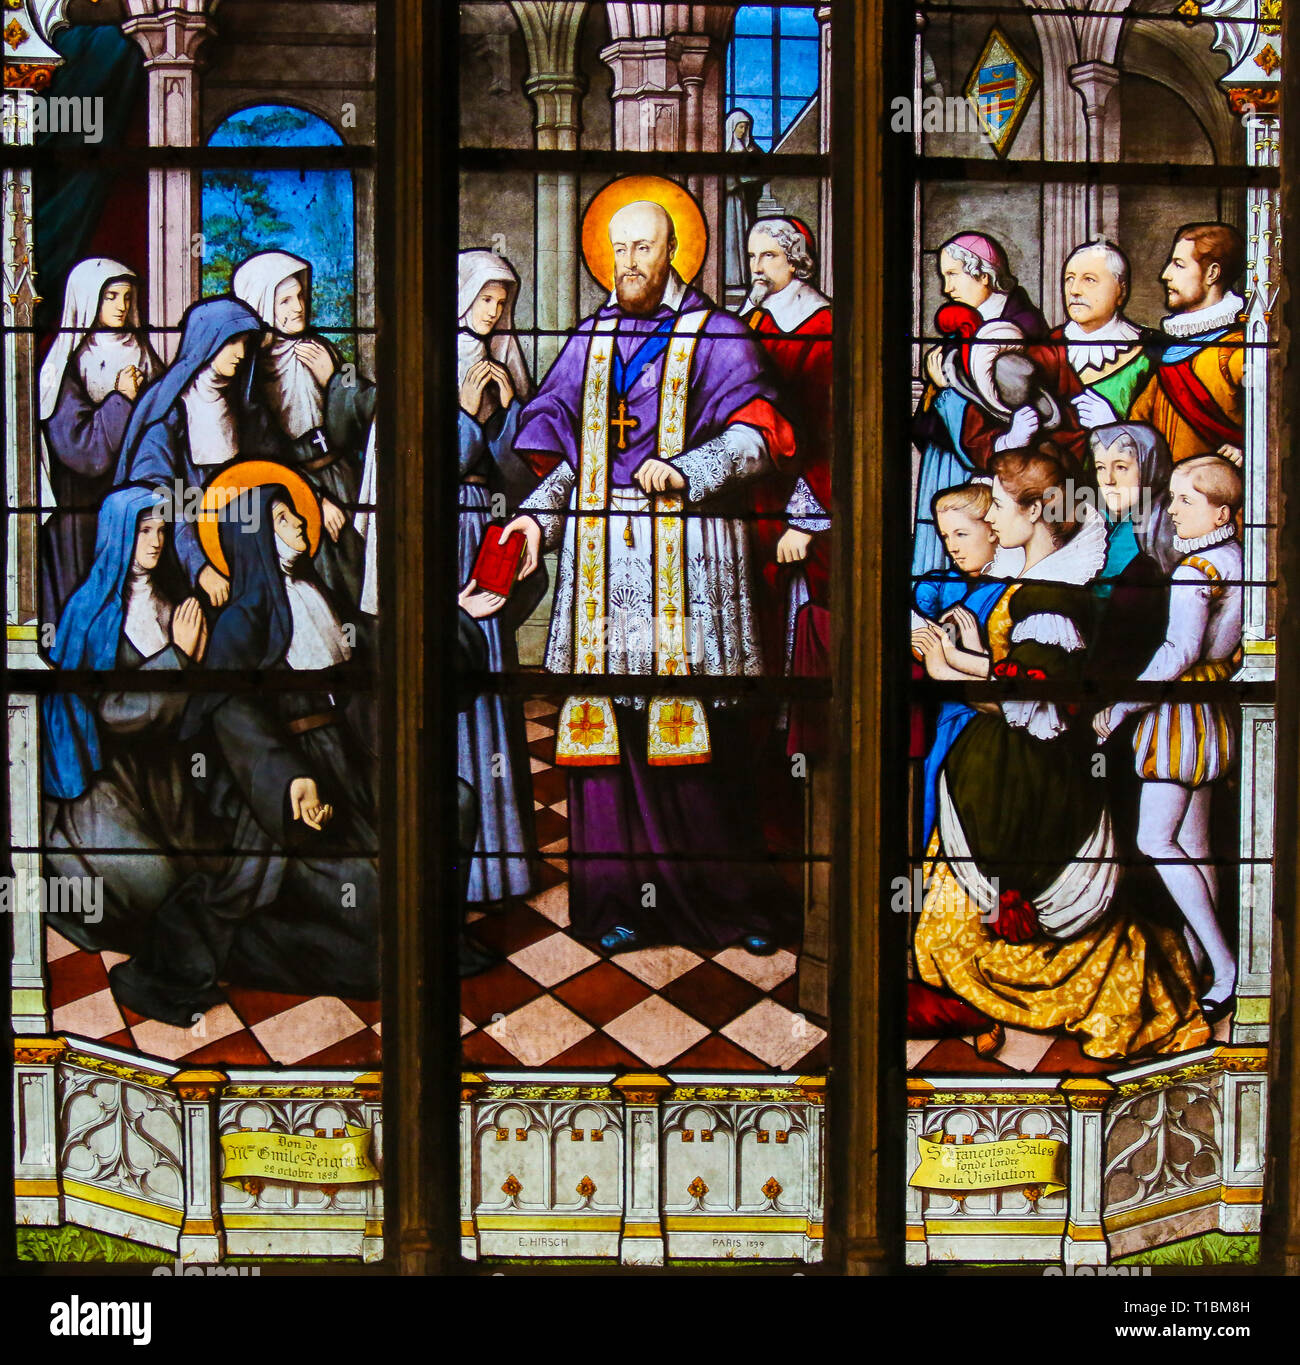 Stained Glass in the Church of Saint Severin, Latin Quarter, Paris, France, depicting Saint Francois de Sales, bishop of Geneva. Stock Photo